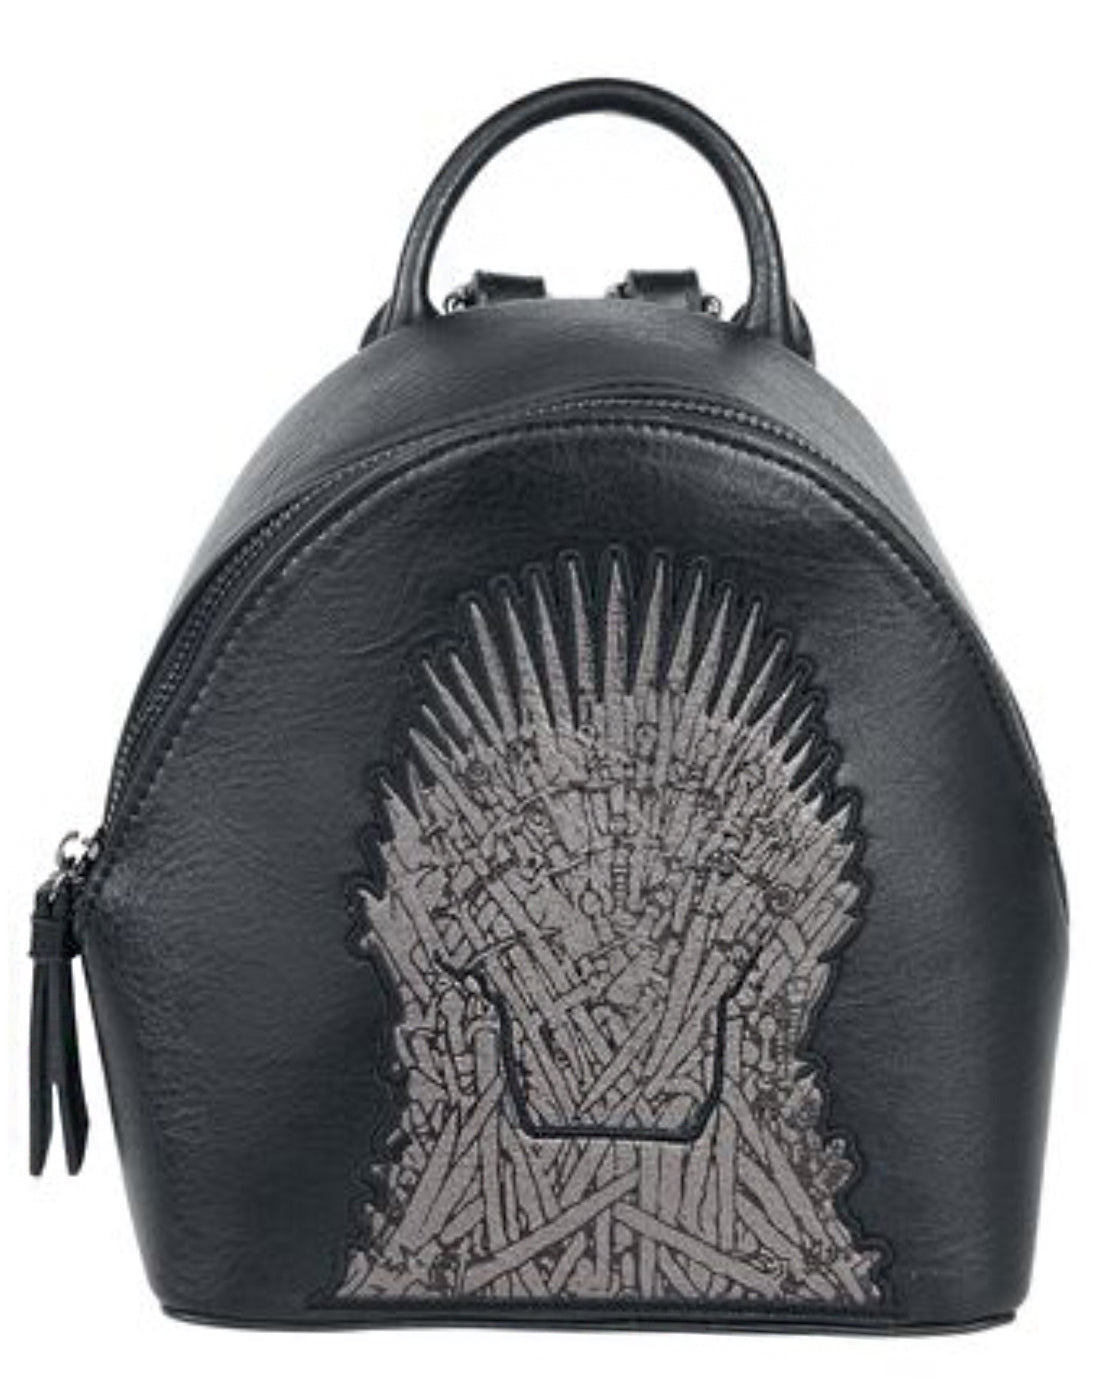 An Ellicott City native's handbag line for 'Game of Thrones' fans –  Baltimore Sun